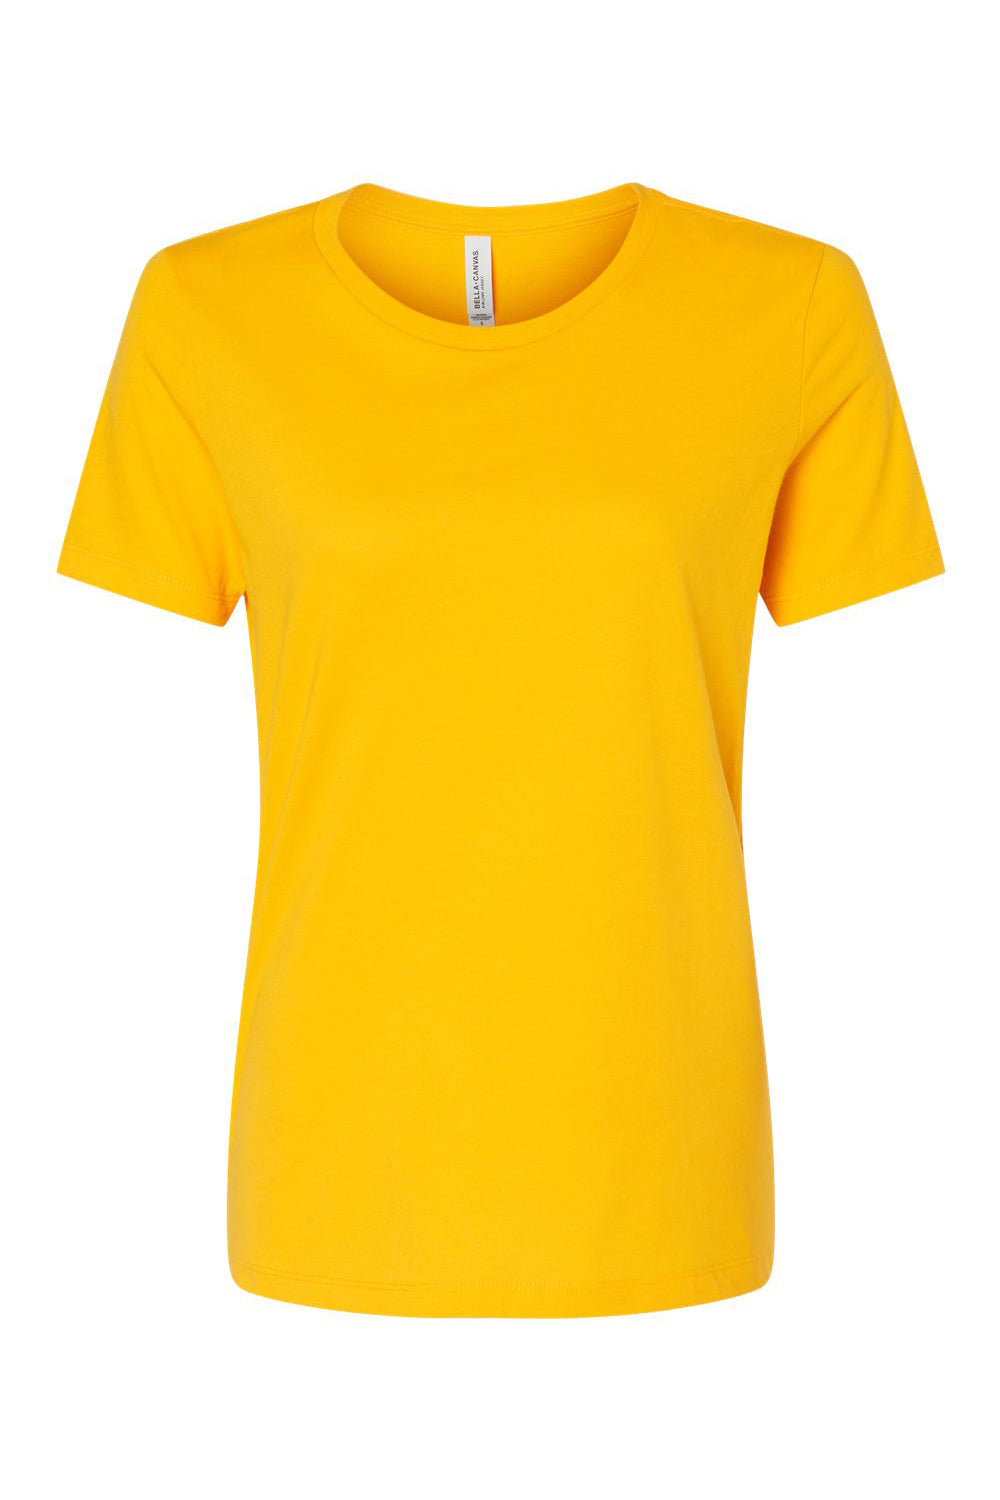 Bella + Canvas BC6400/B6400/6400 Womens Relaxed Jersey Short Sleeve Crewneck T-Shirt Gold Flat Front